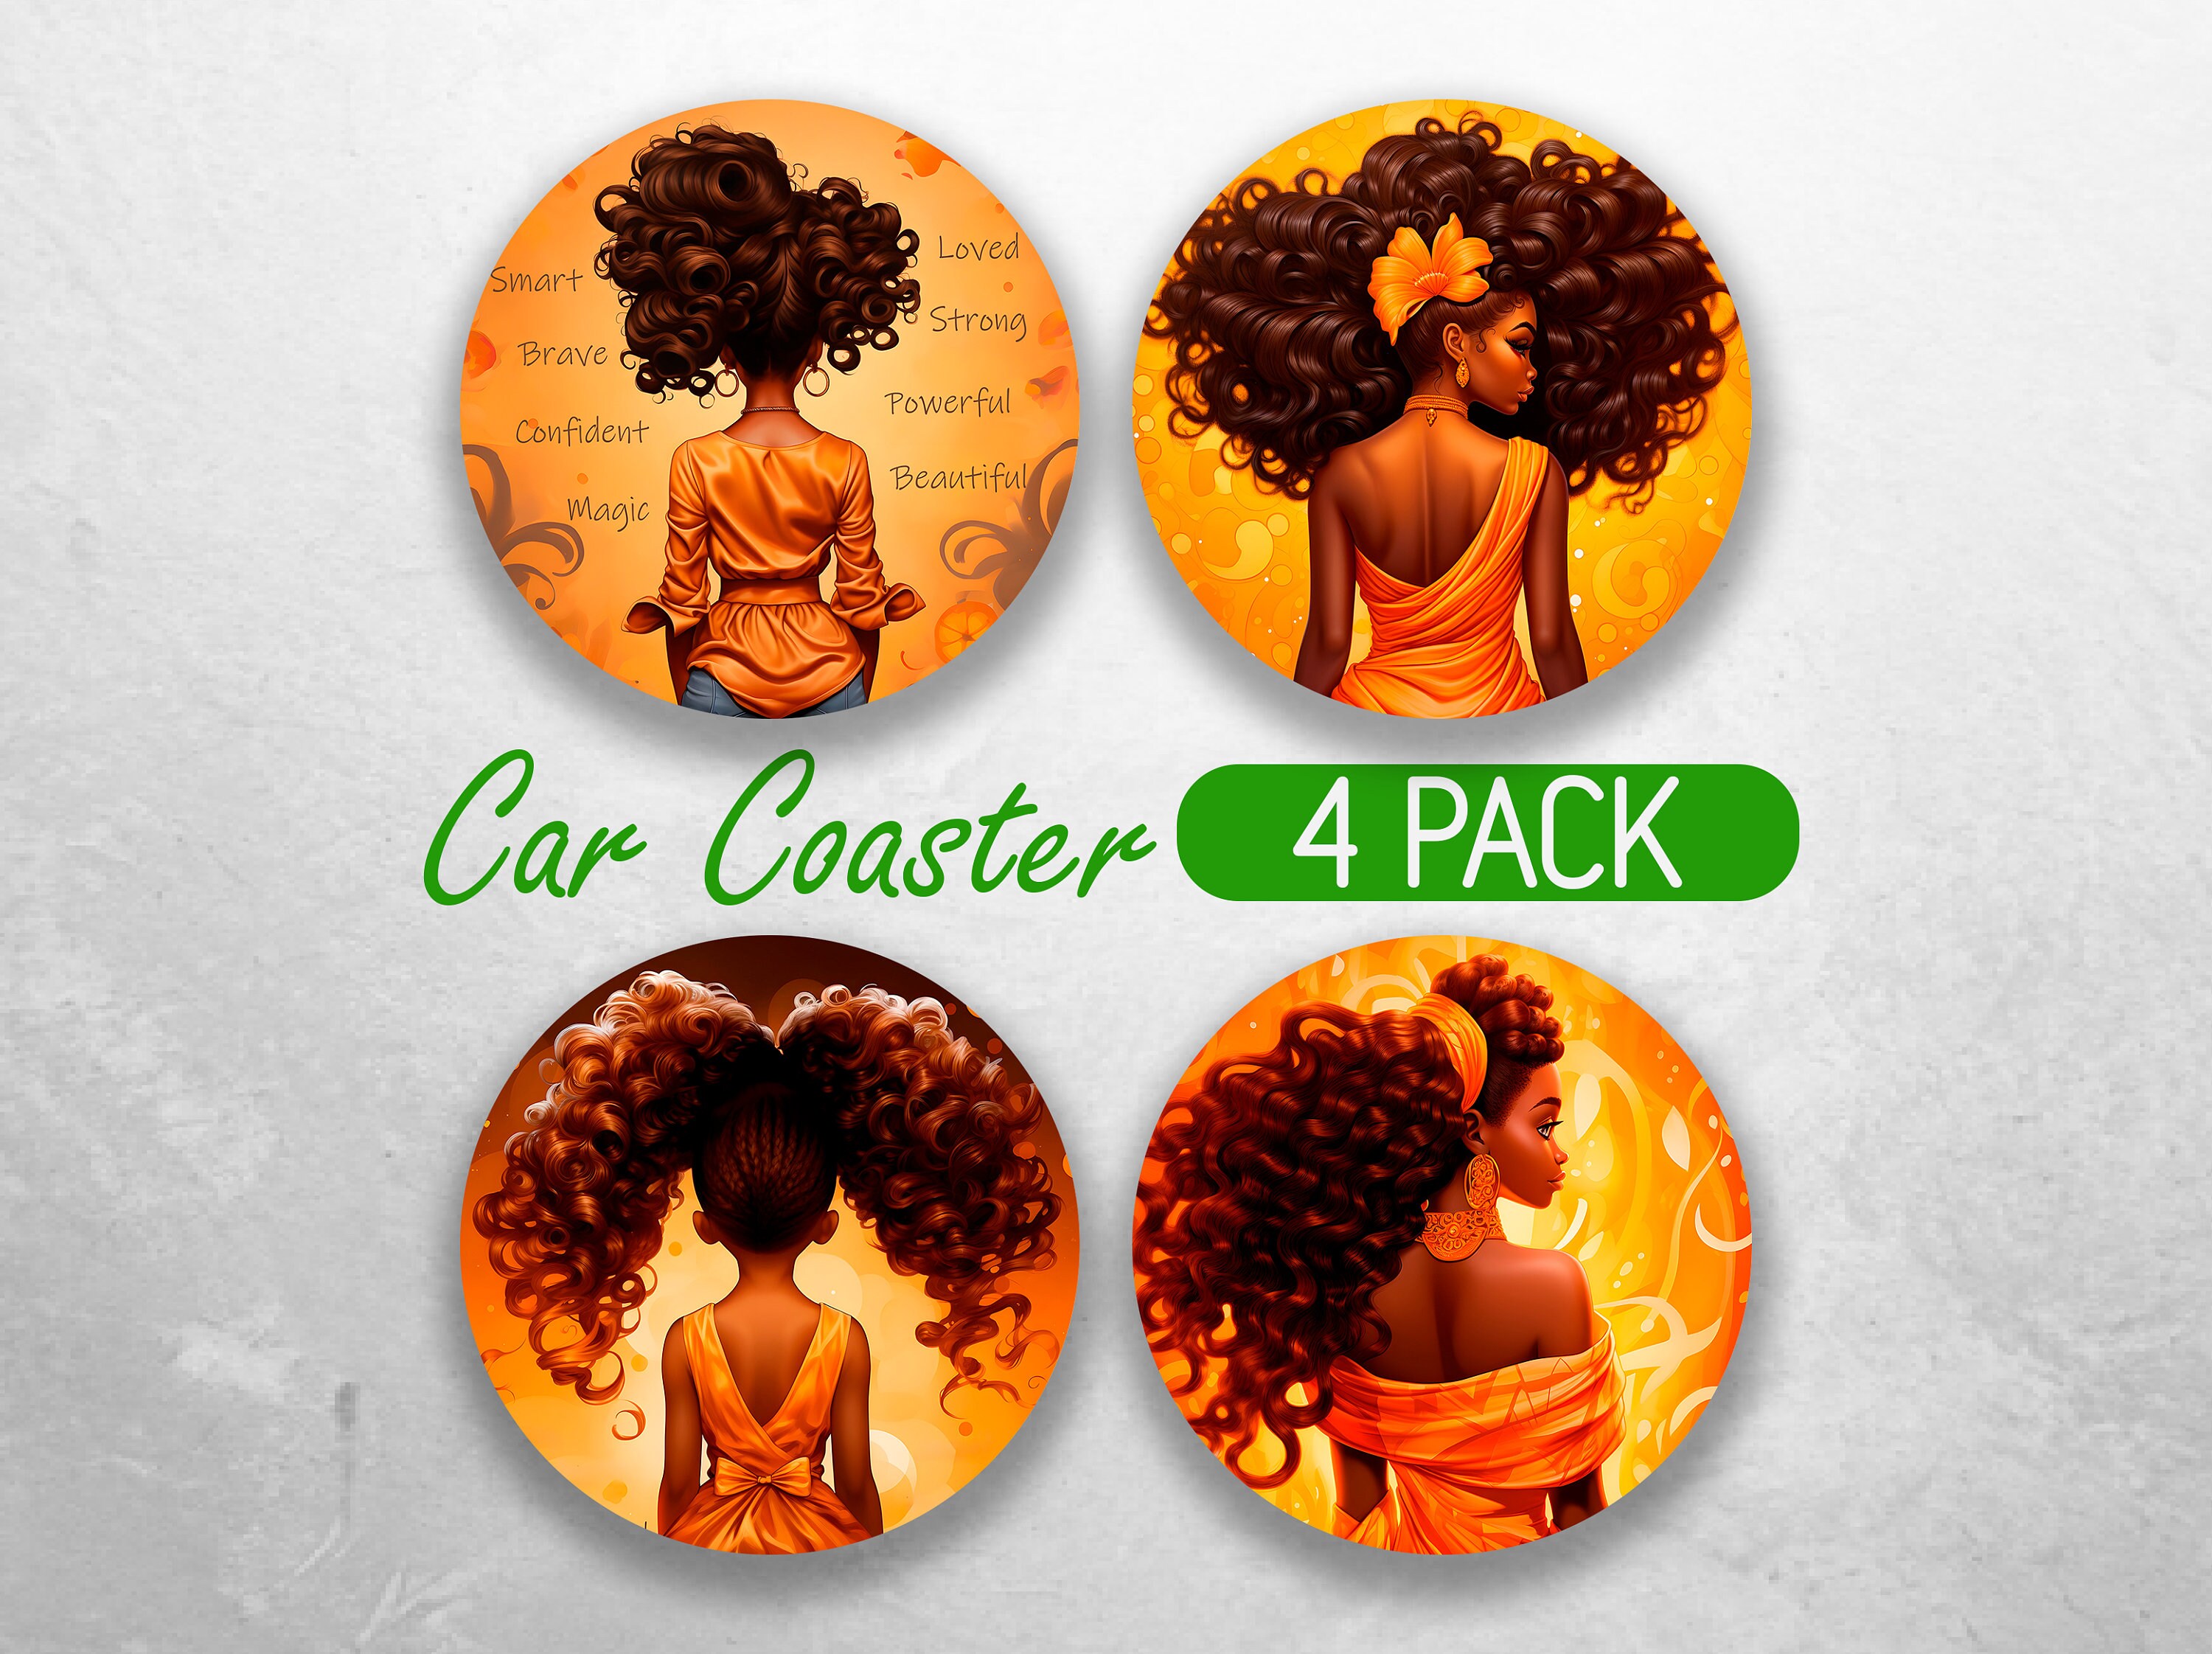 Car Coaster Tag, Car Coaster Packaging, Car Coaster Care